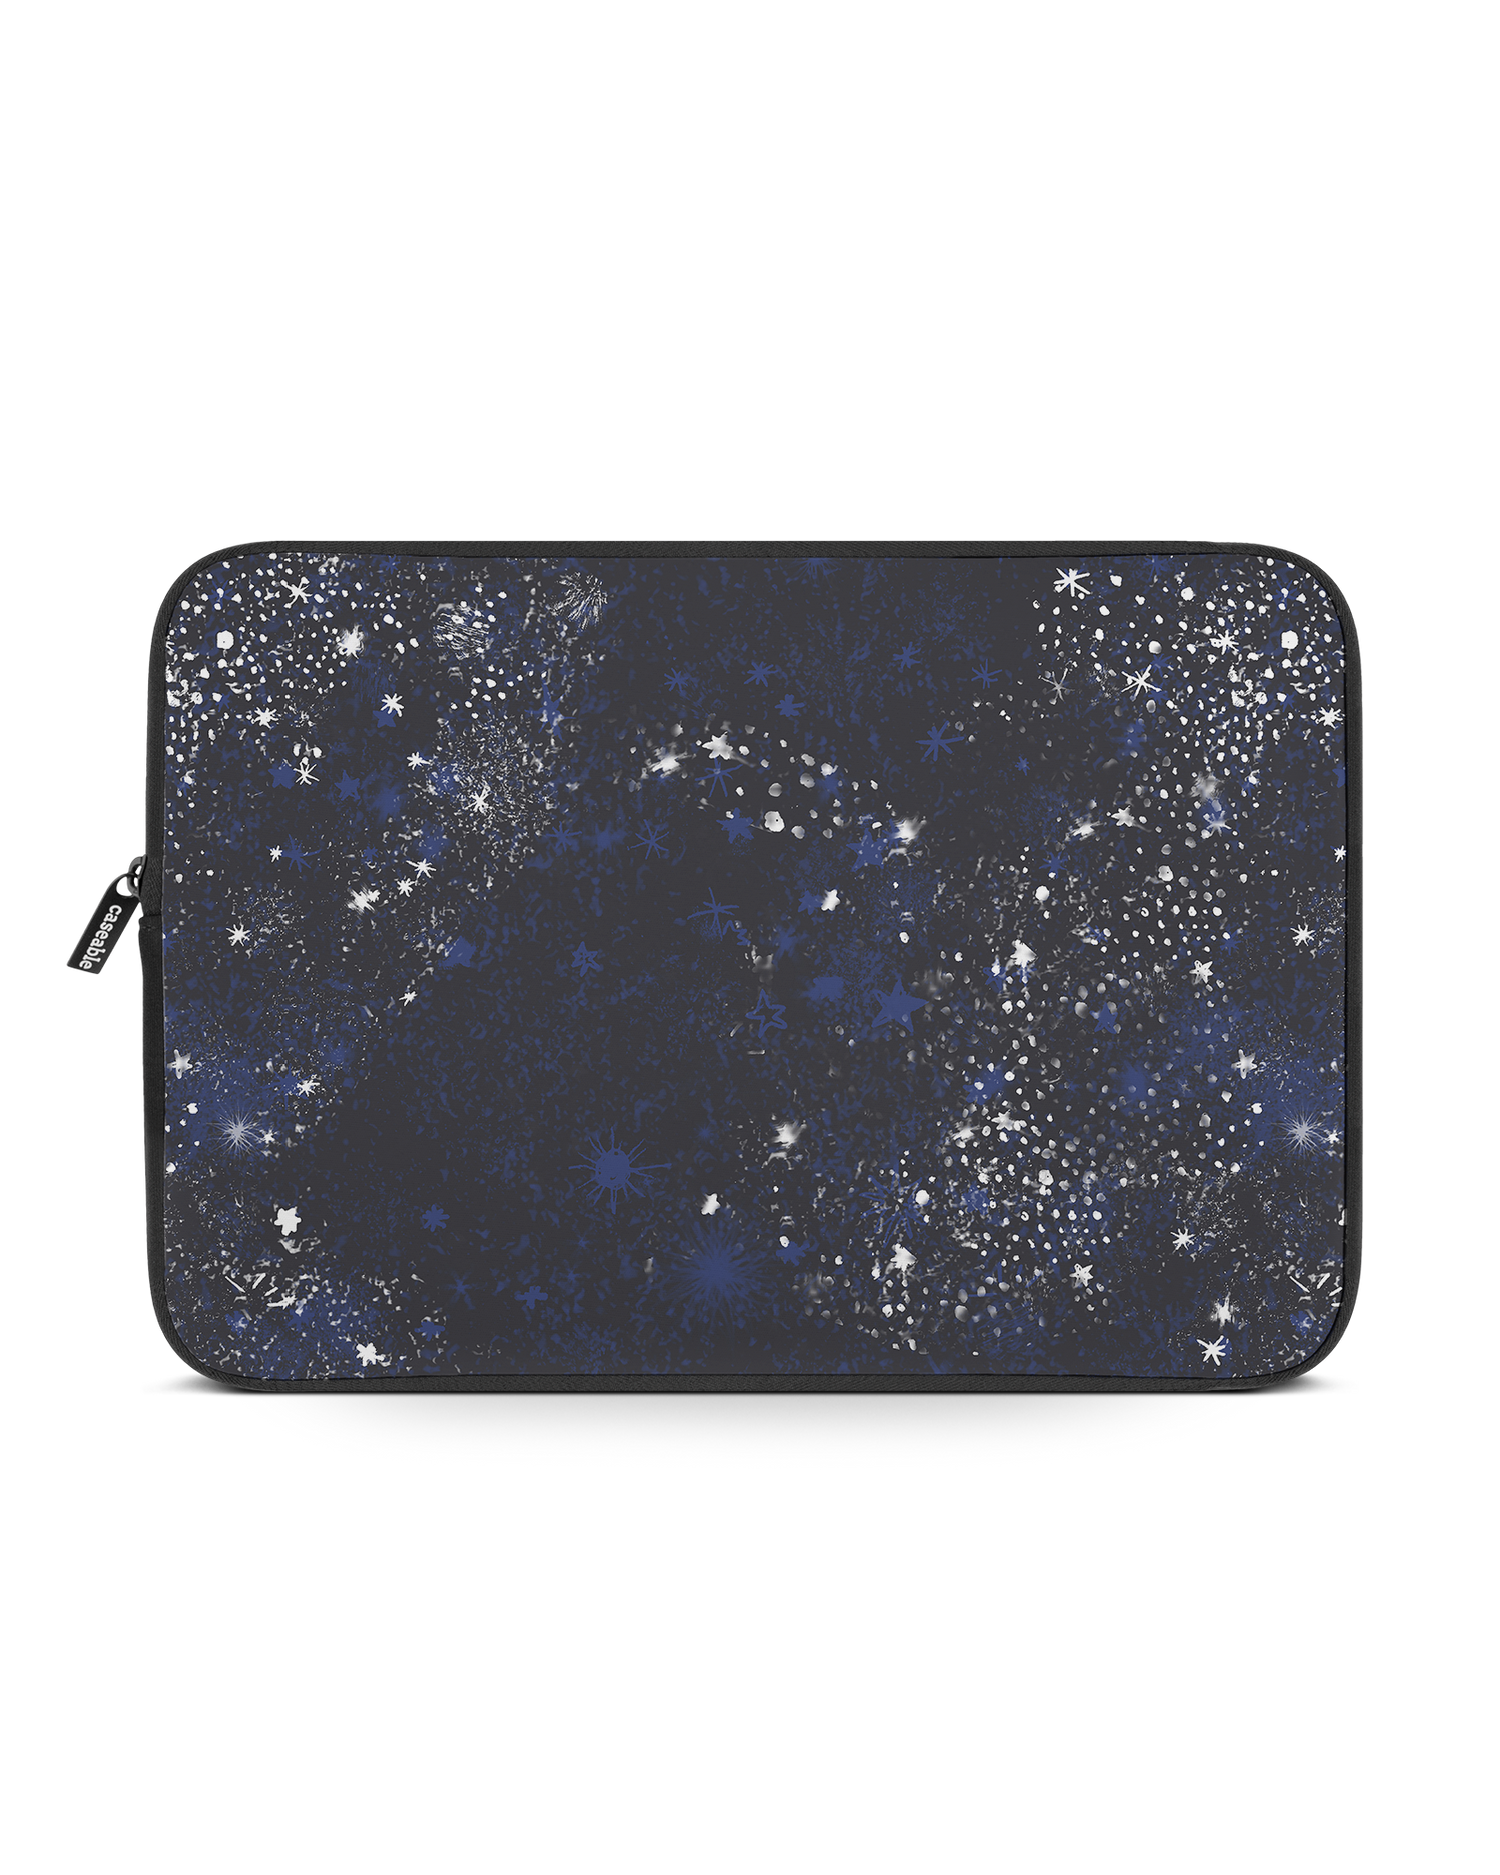 Starry Night Sky Laptophülle 15-16 Zoll: Vorderansicht